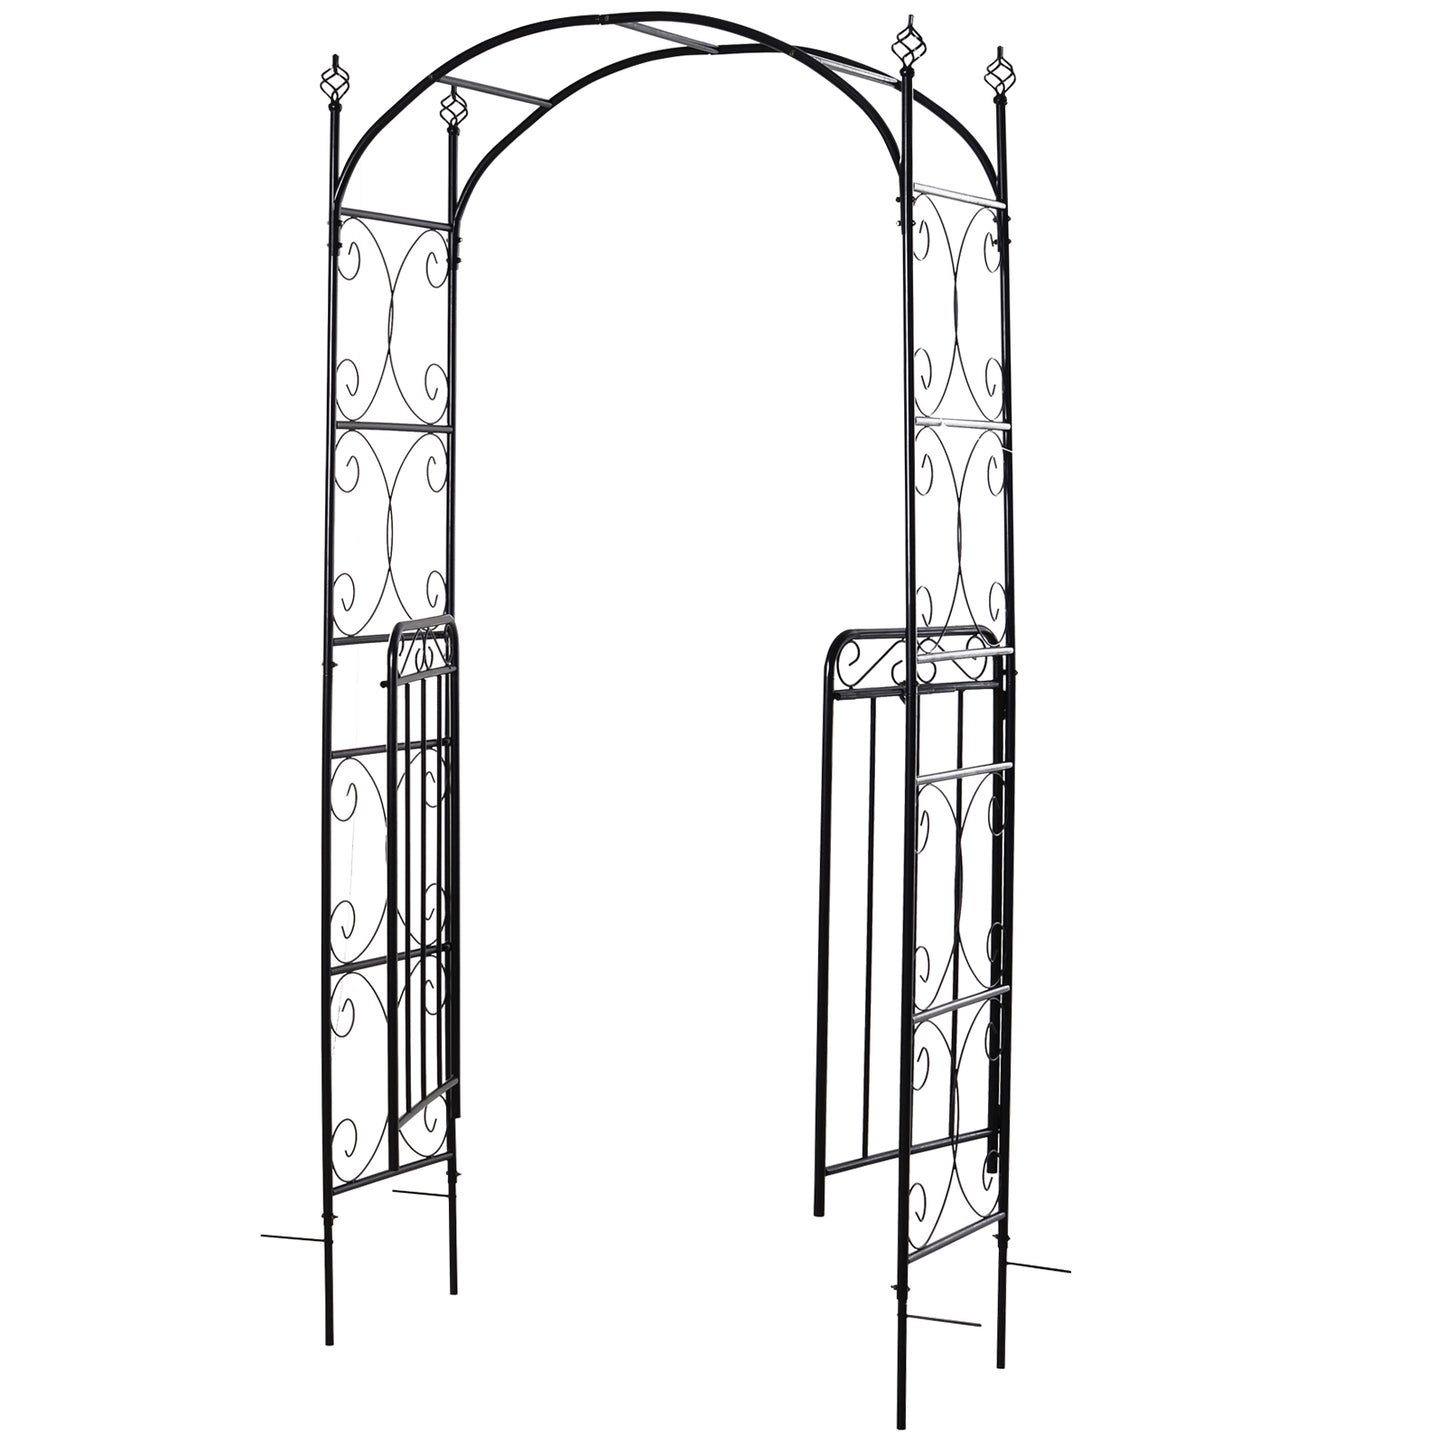 Outsunny Metal Outdoor Garden Gate w/ Arch Black